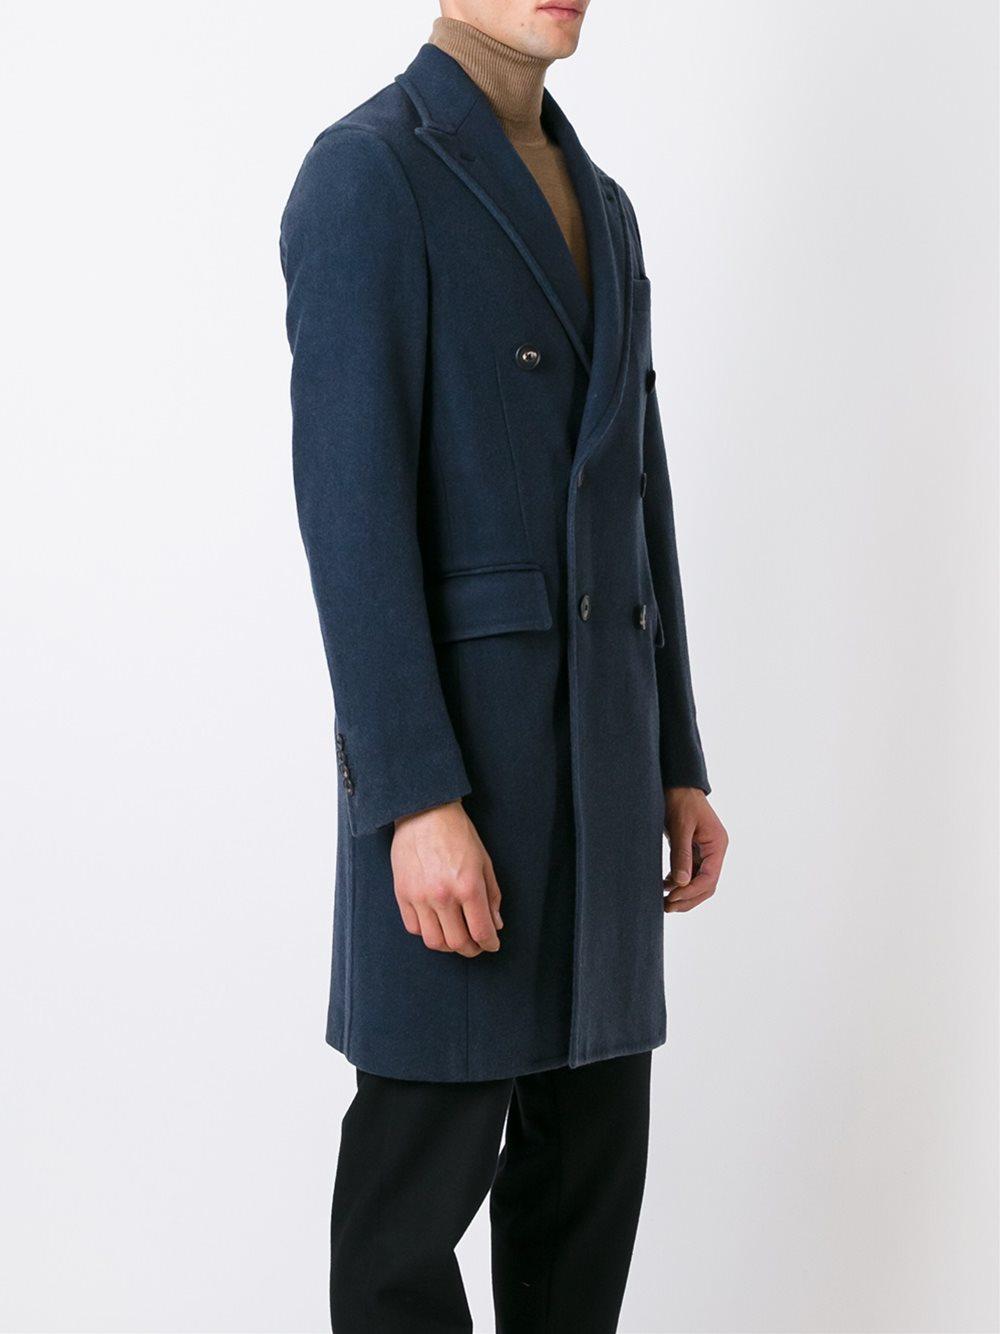 Lyst - Boglioli Long Pea Coat in Blue for Men